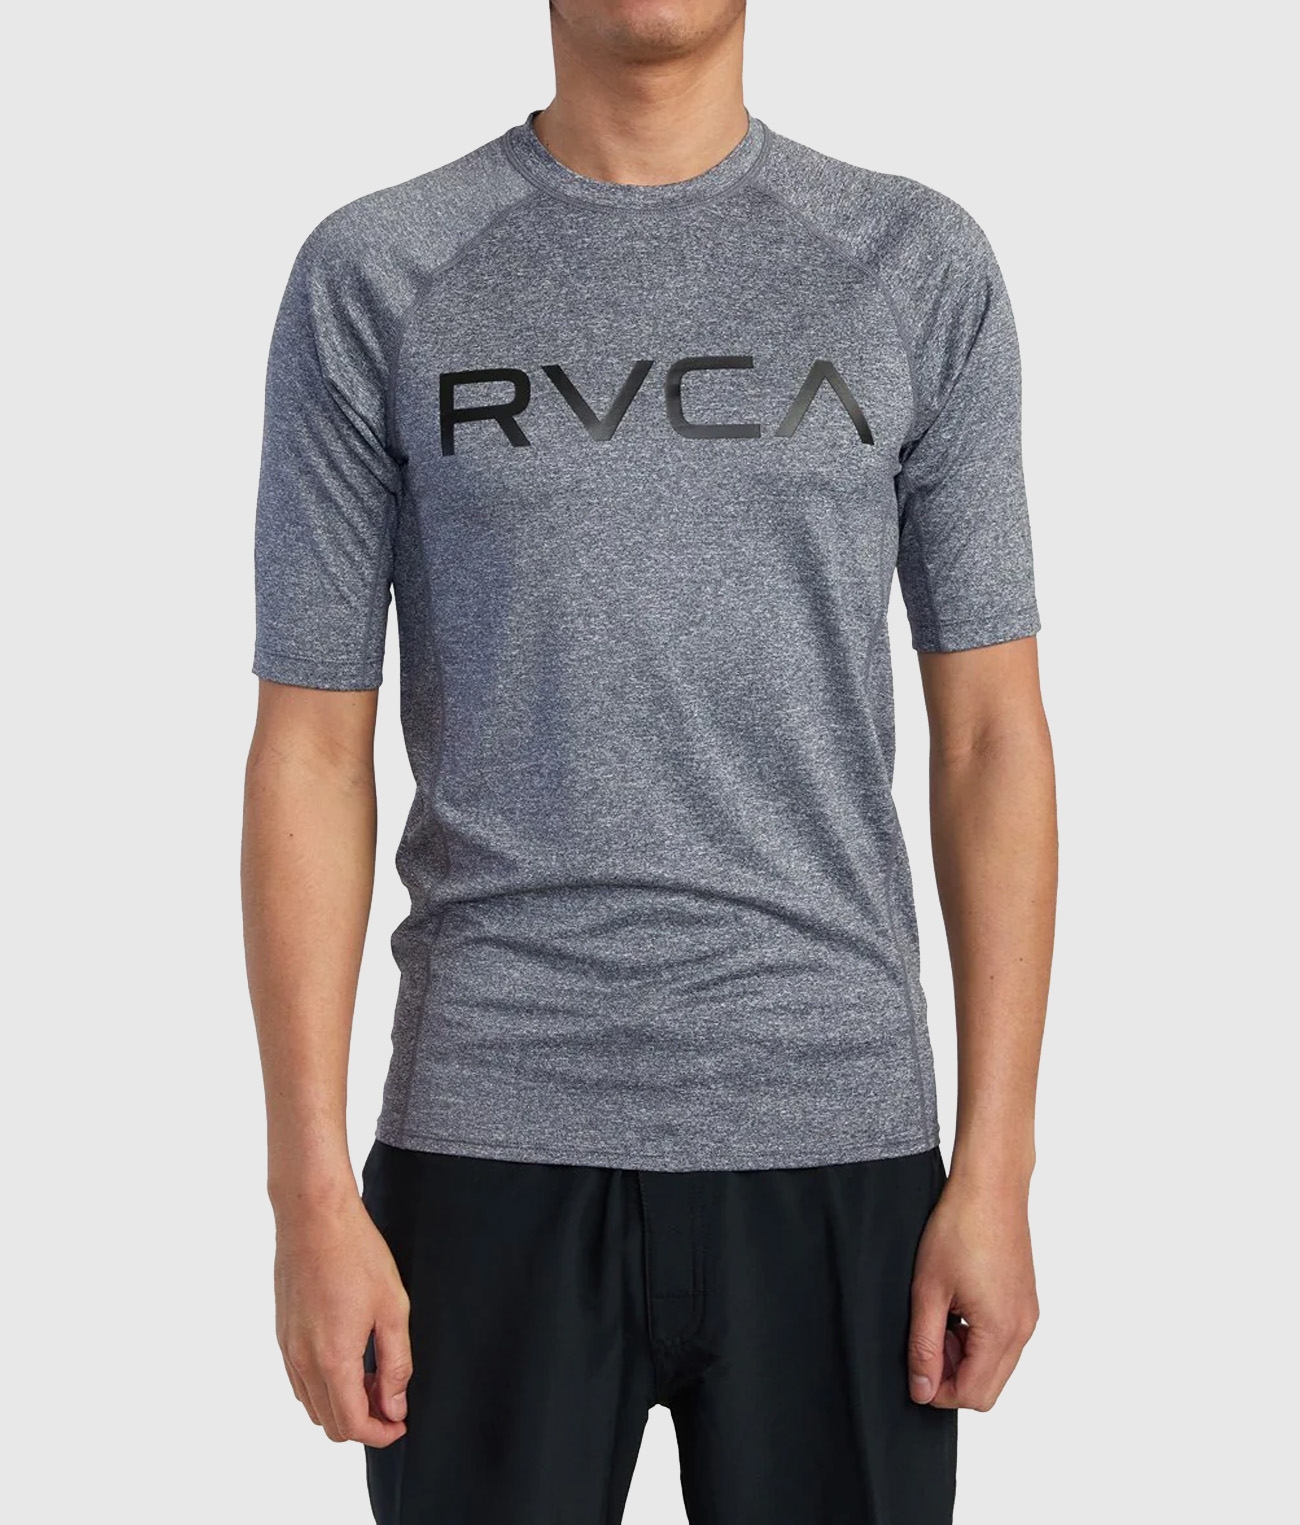 RVCA Short Sleeve Rashguard